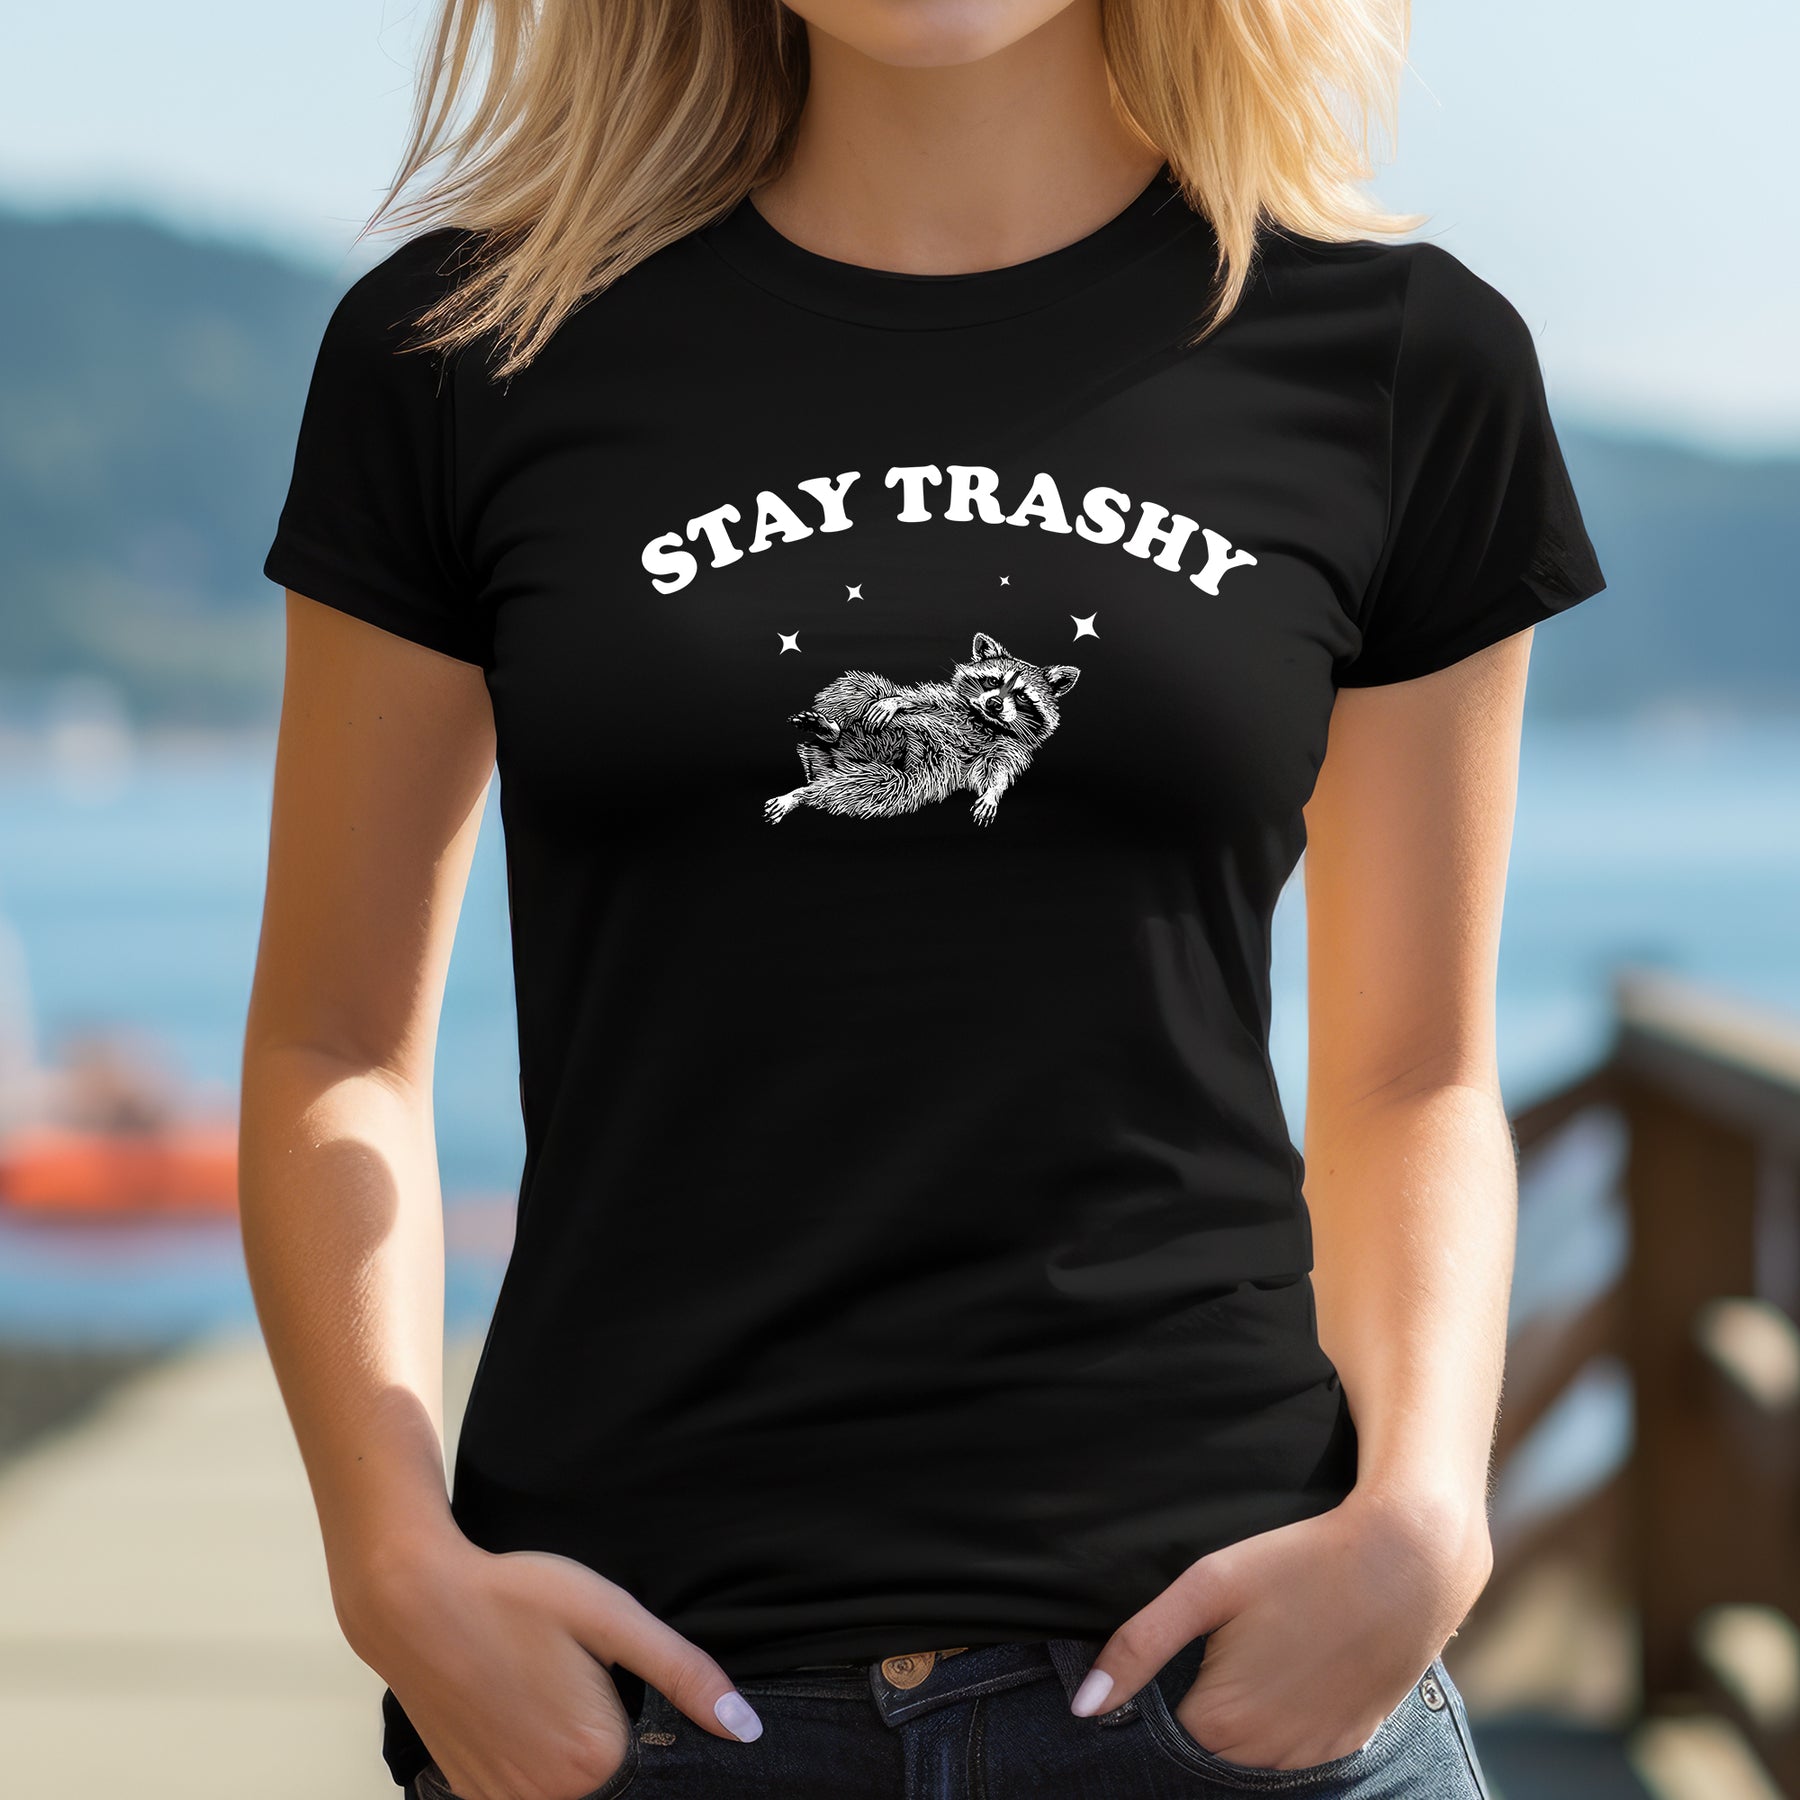 "Stay Trashy" Premium Midweight Ringspun Cotton T-Shirt - Mens/Womens Fits